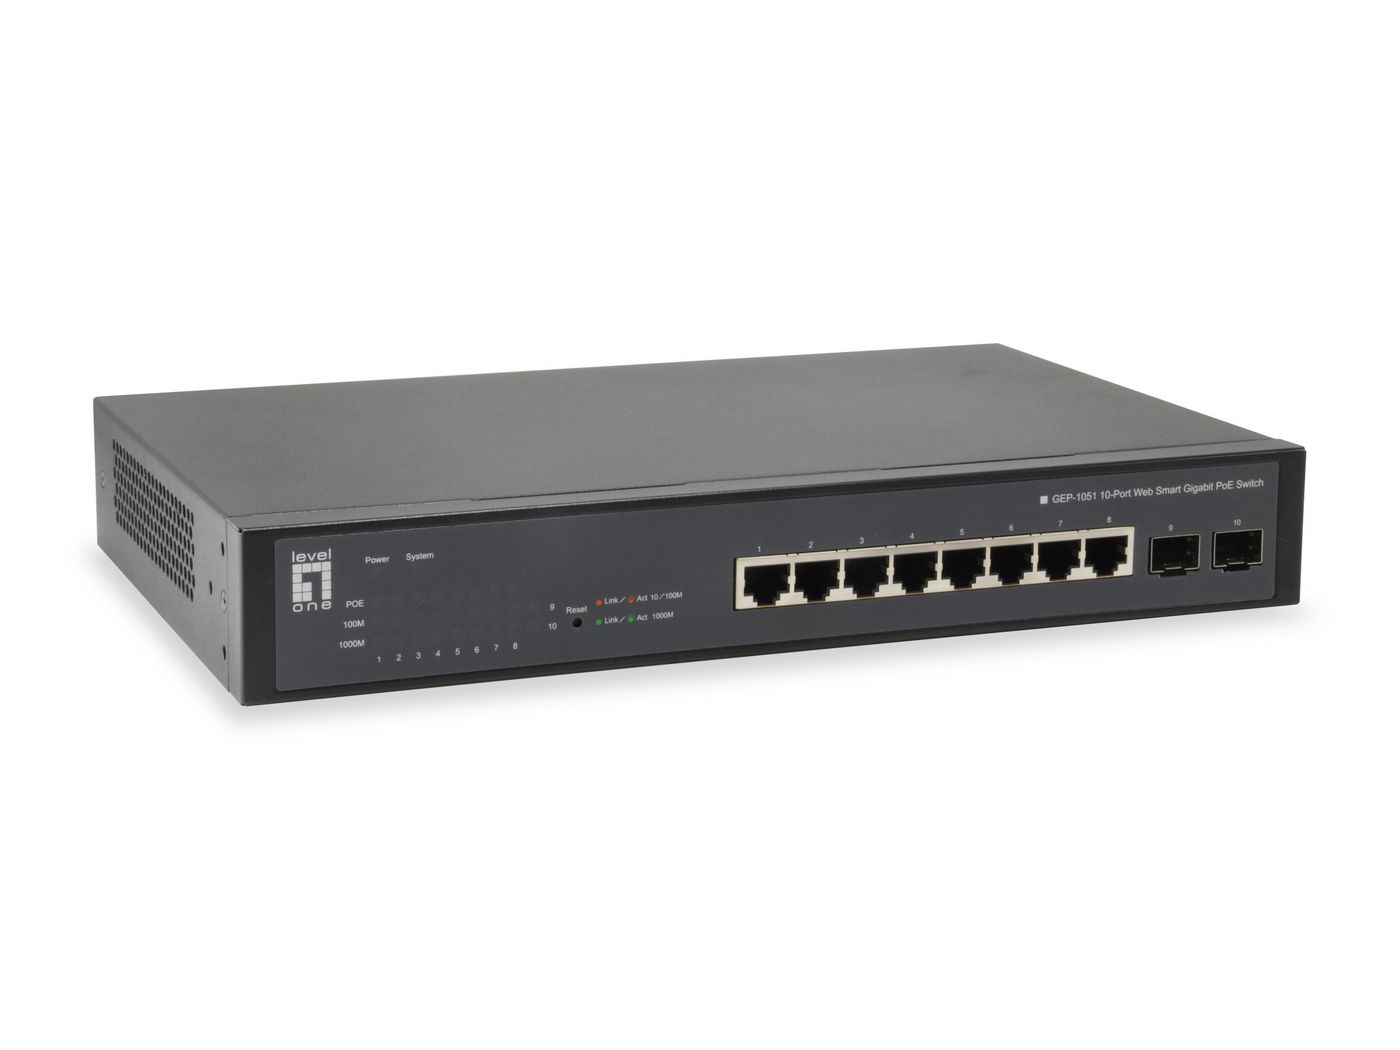 LevelOne GEL-1051 W128254150 10-Port Web Smart Gigabit 